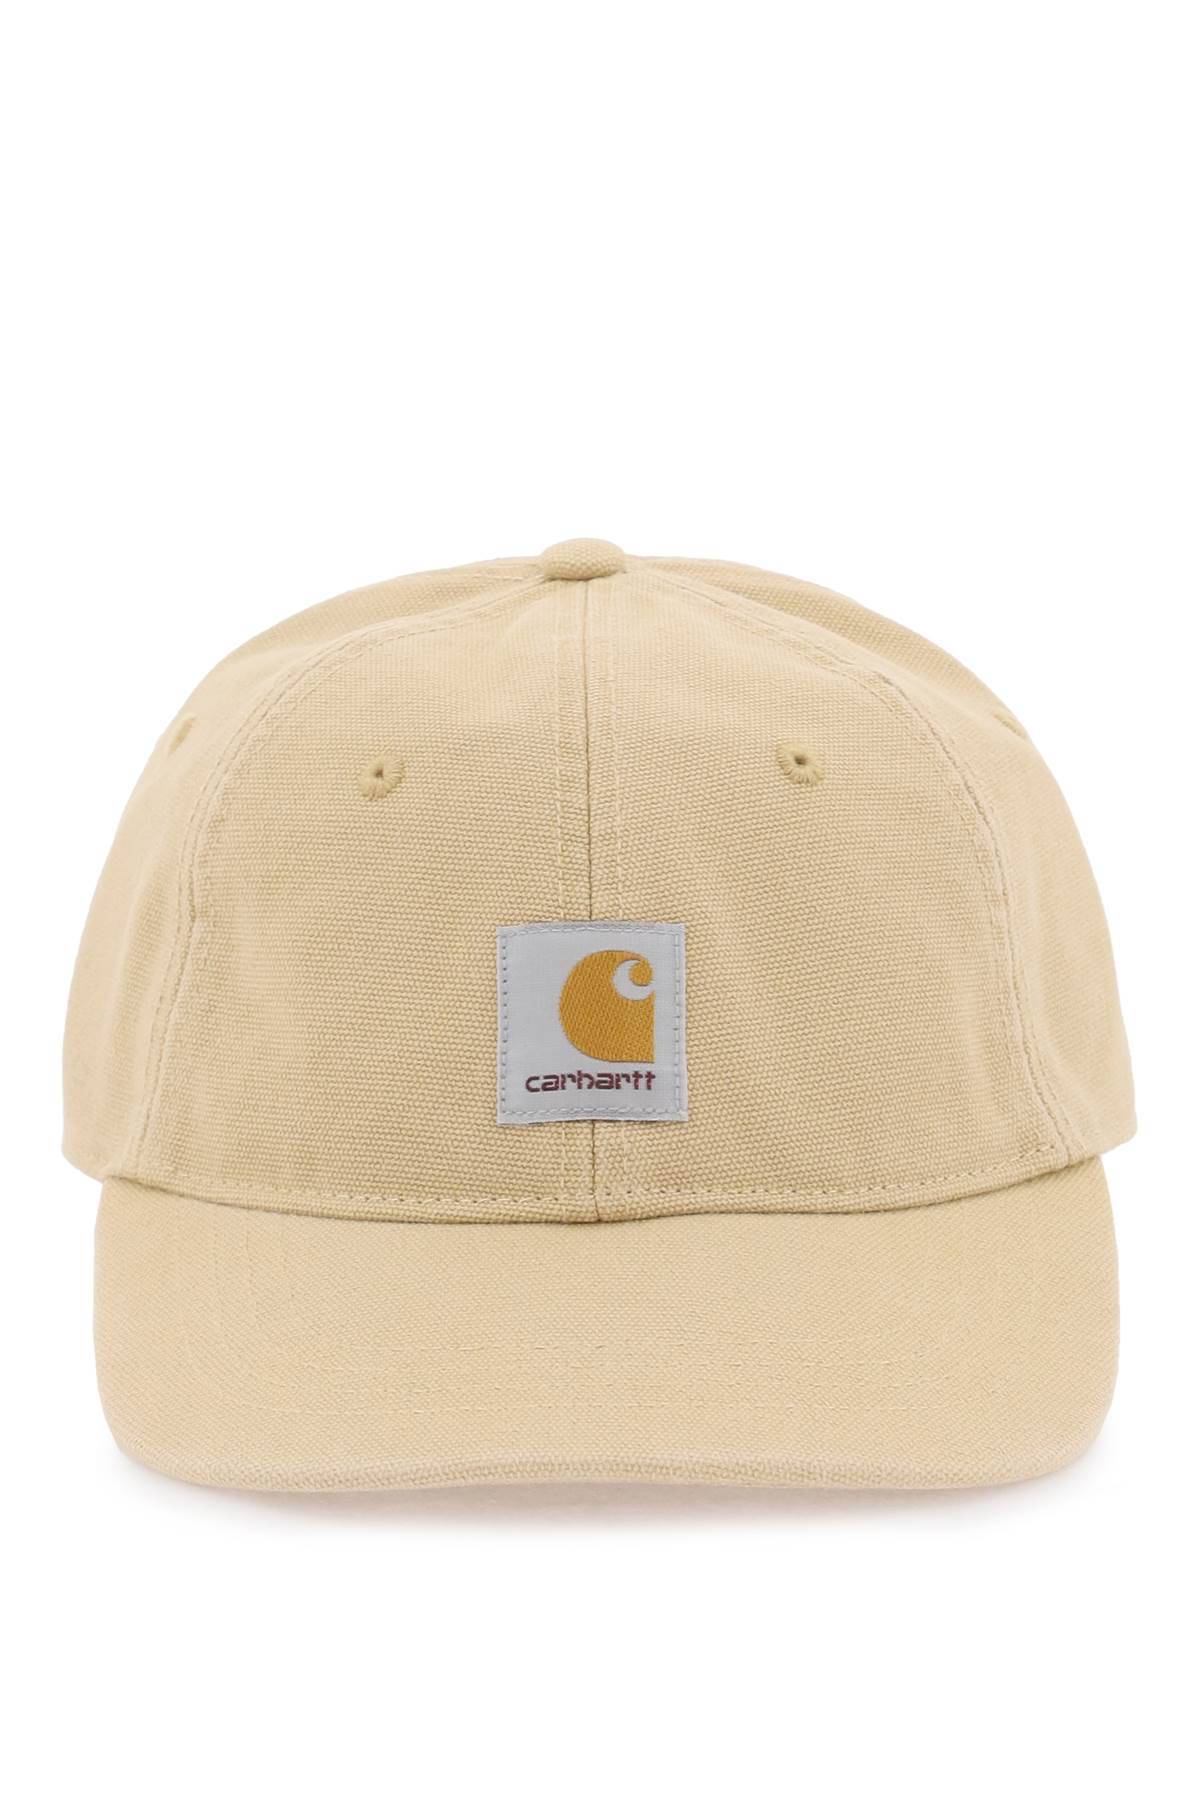 Carhartt WIP CARHARTT WIP icon baseball cap with patch logo